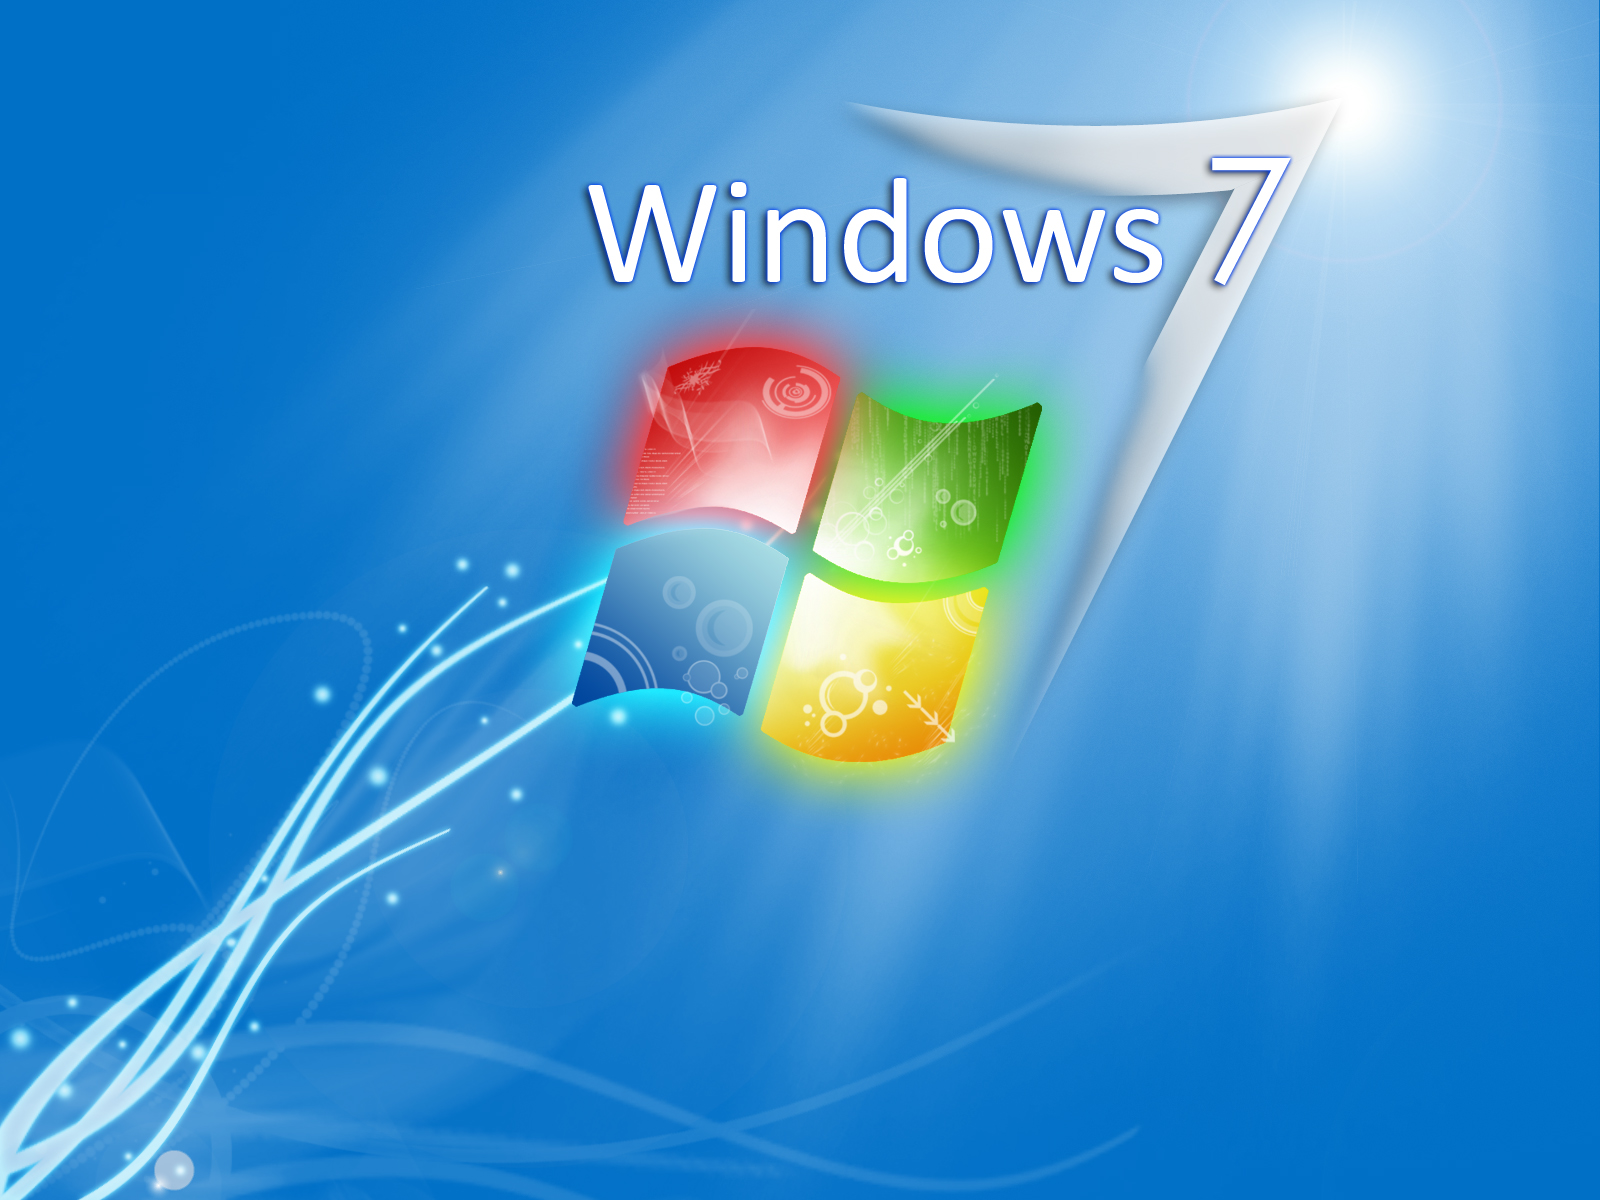 windows 7 ultimate 3d desktop download